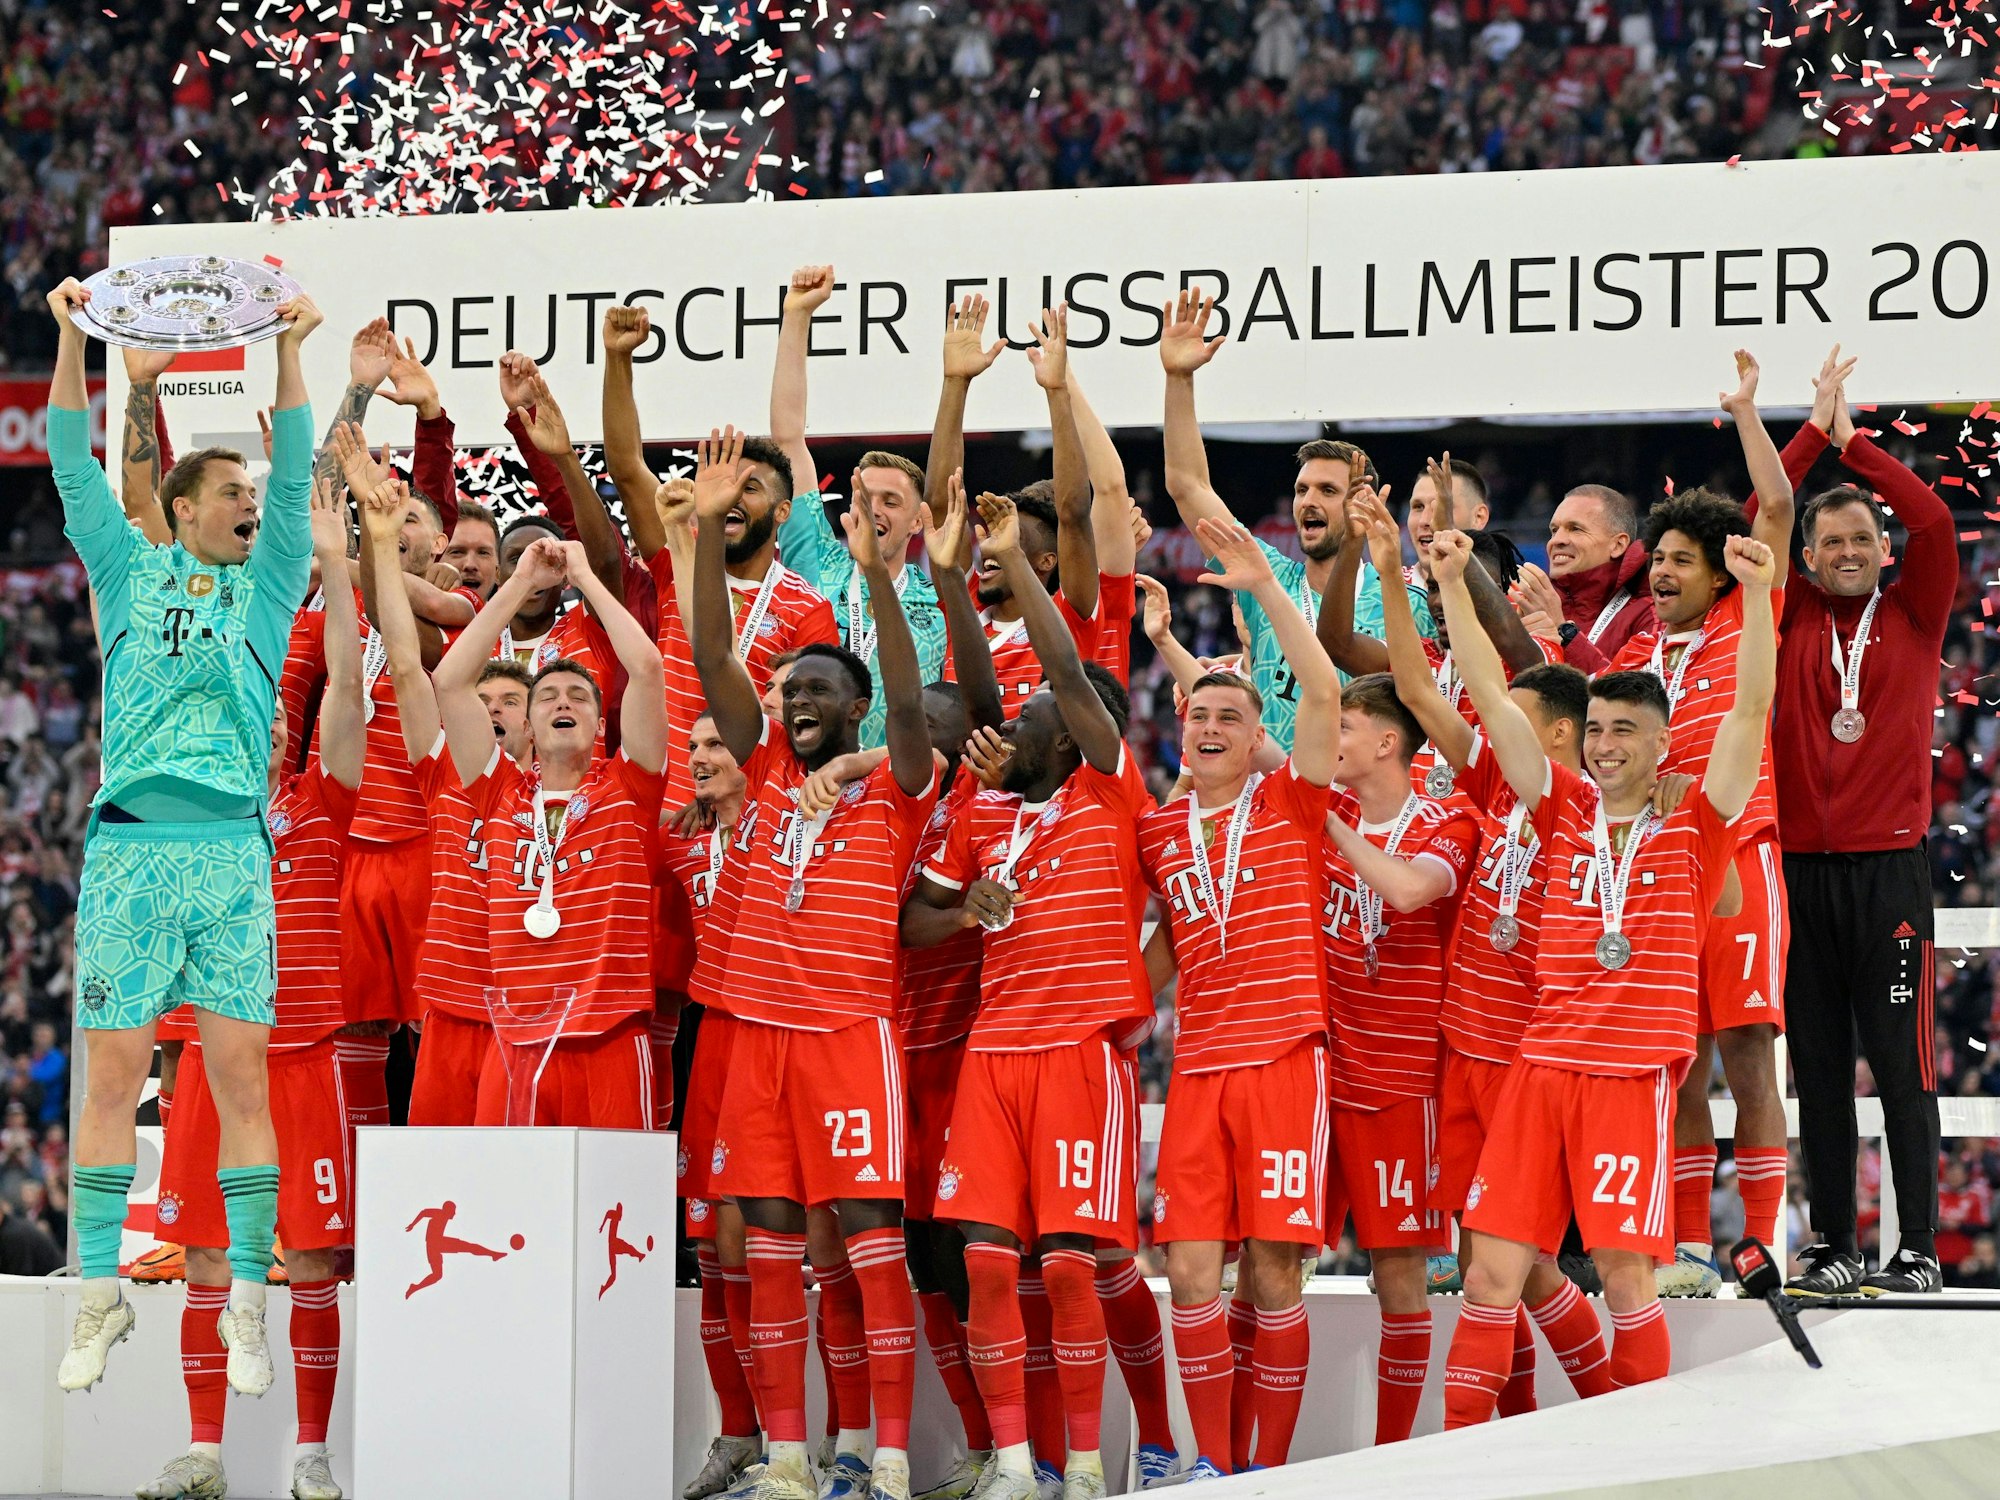 Das Team des FC Bayern München feiert nach dem 2:2 gegen den VfB Stuttgart die Meisterschaft (8. Mai 2022).